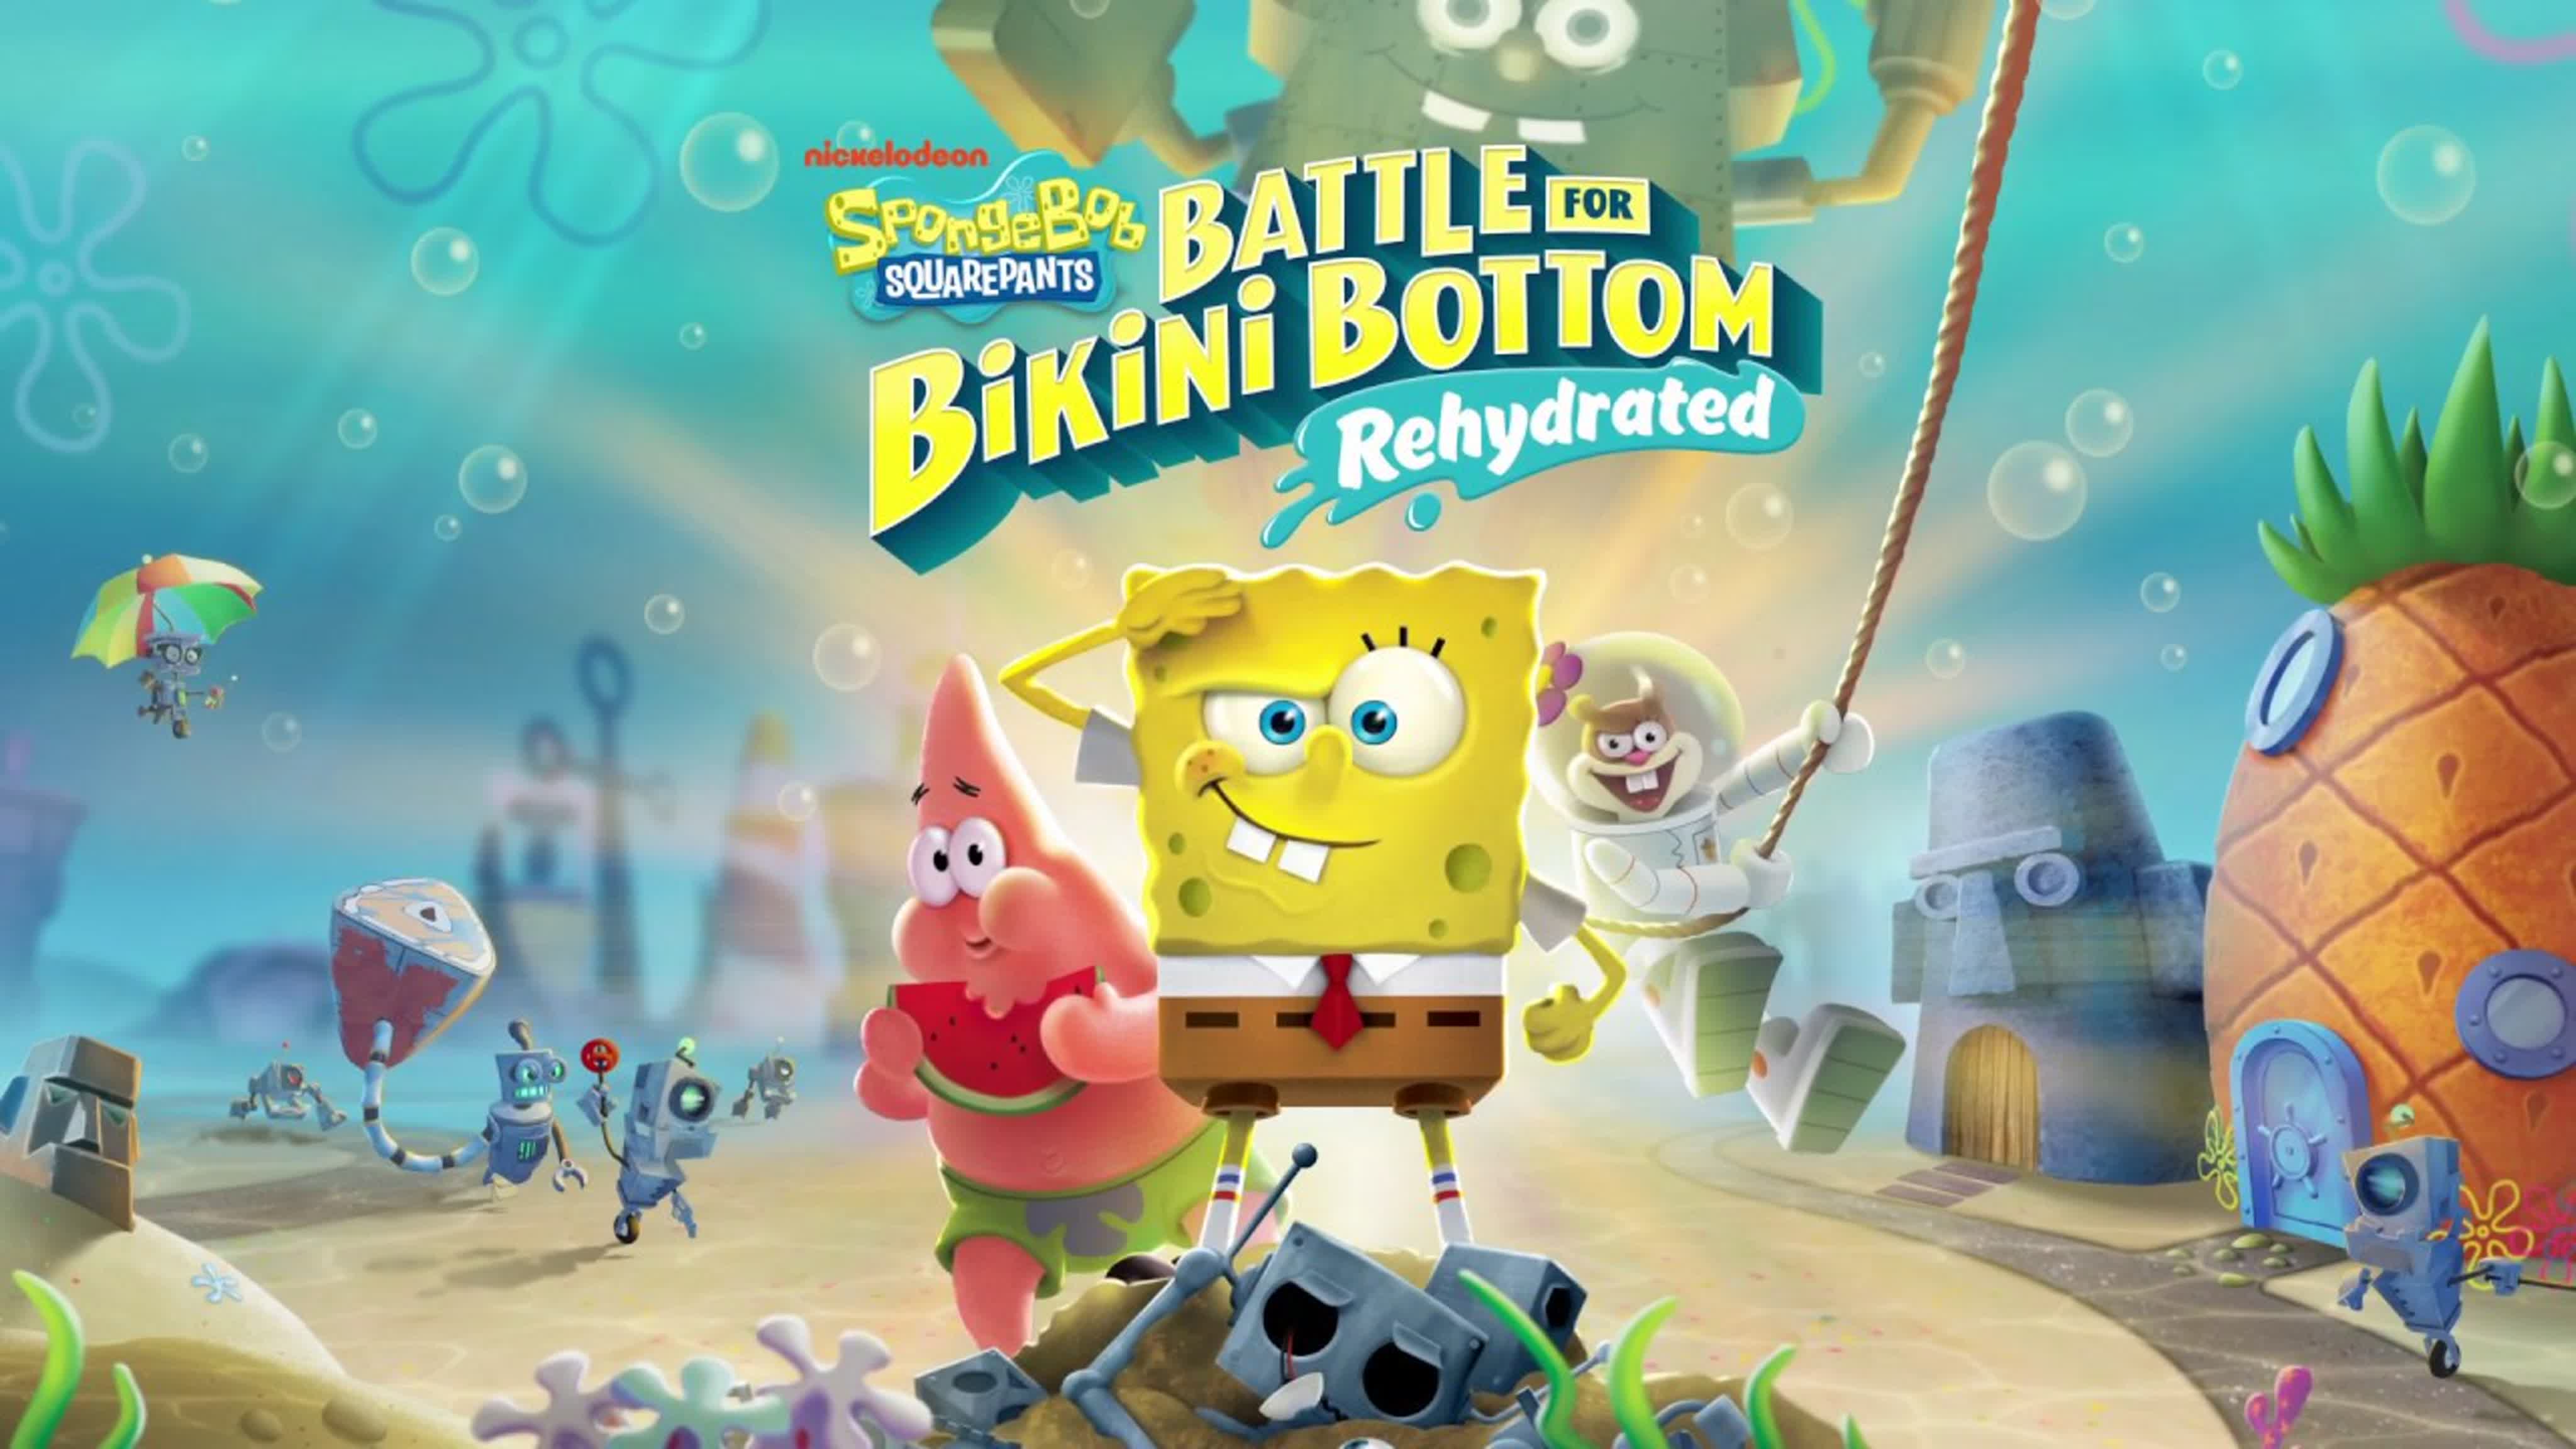 Игры губка боб квадратные штаны. Губка Боб битва за бикини Боттом 2020. Губка Боб квадратные штаны игра 2020. Игра губка Боб битва за бикини Боттом 2020. Spongebob Squarepants: Battle for Bikini bottom - rehydrated.